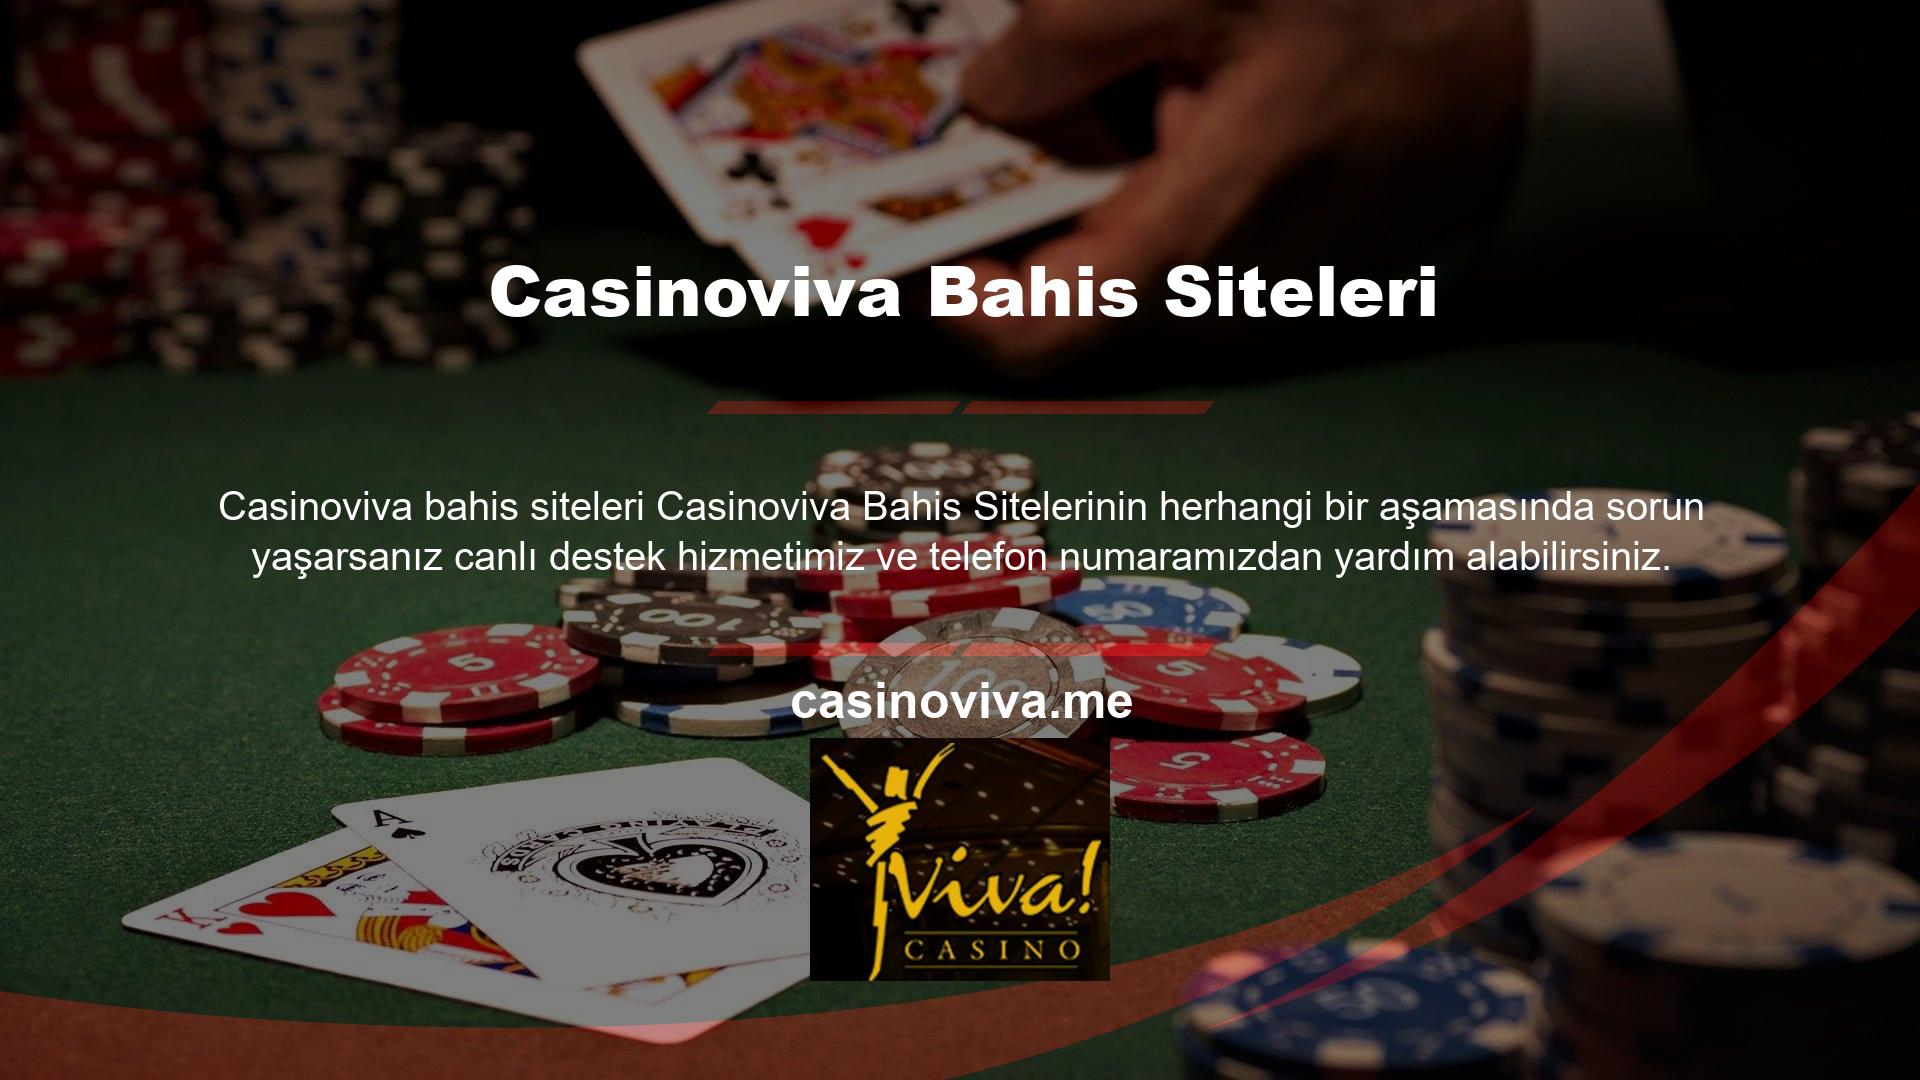 Casinoviva Bahis Siteleri